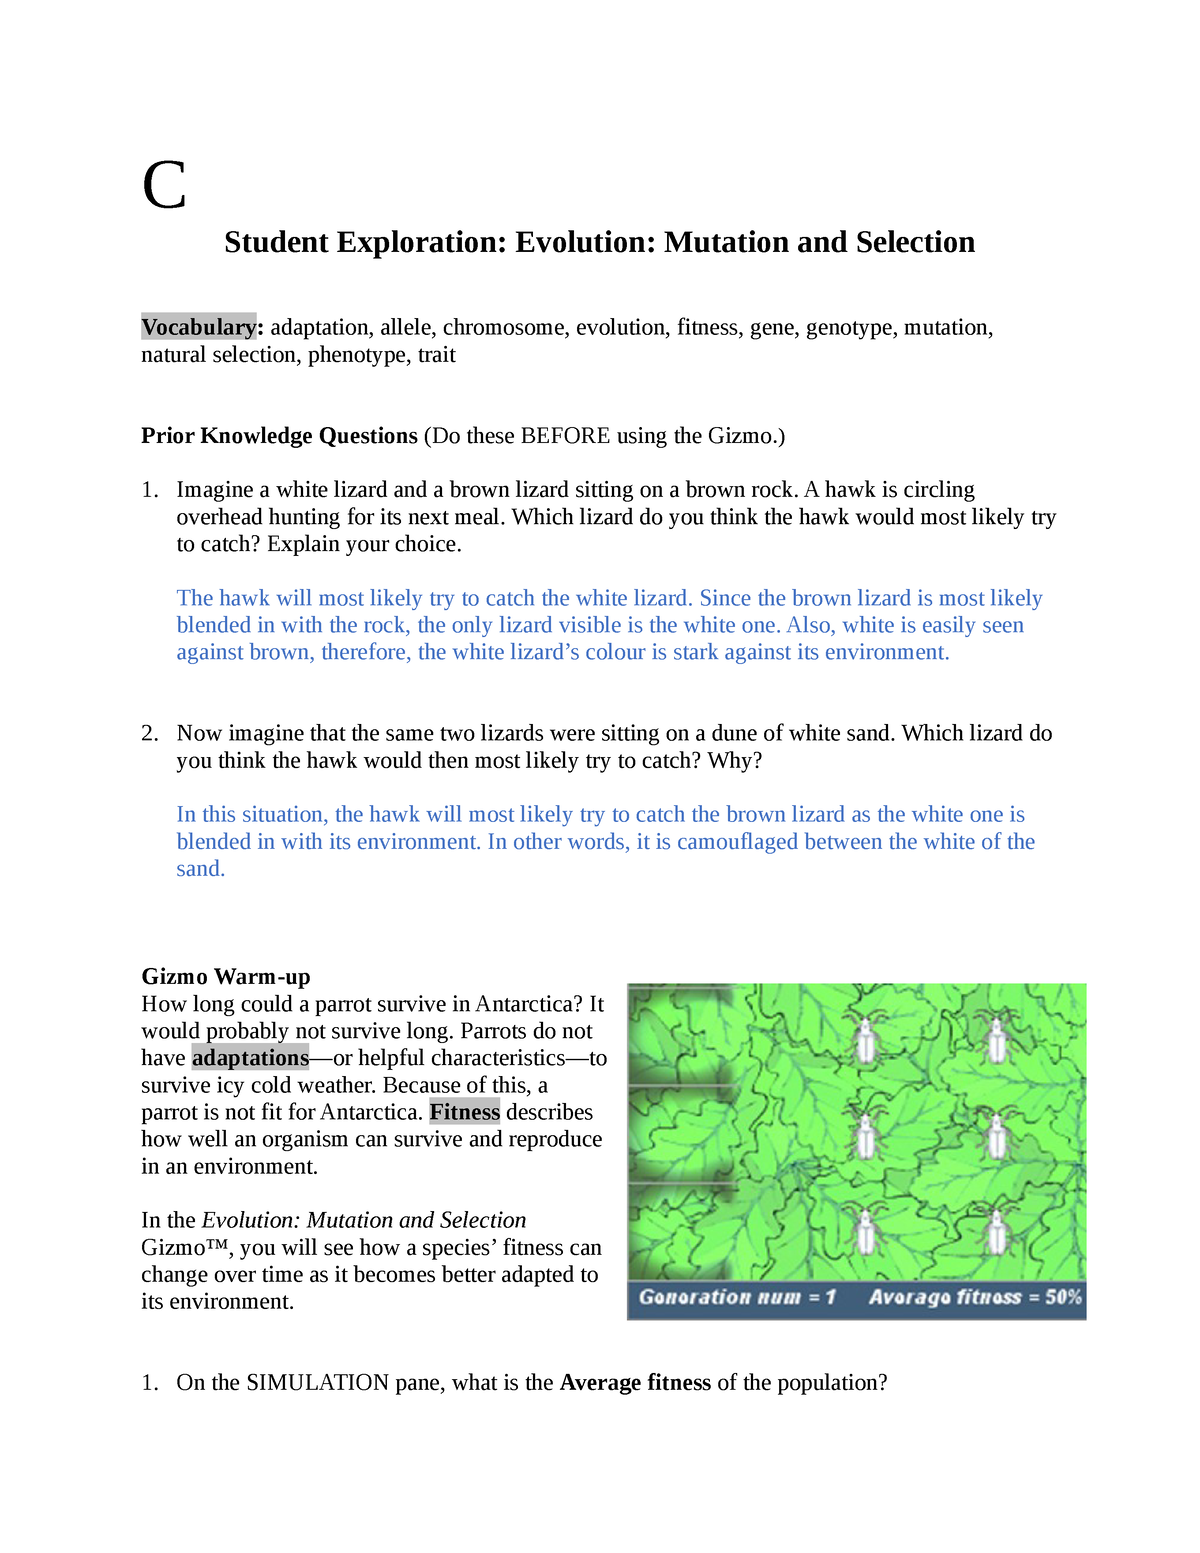 C Student Exploration Evolution Mutation and Selection - C Student  Exploration: Evolution: Mutation - Studocu